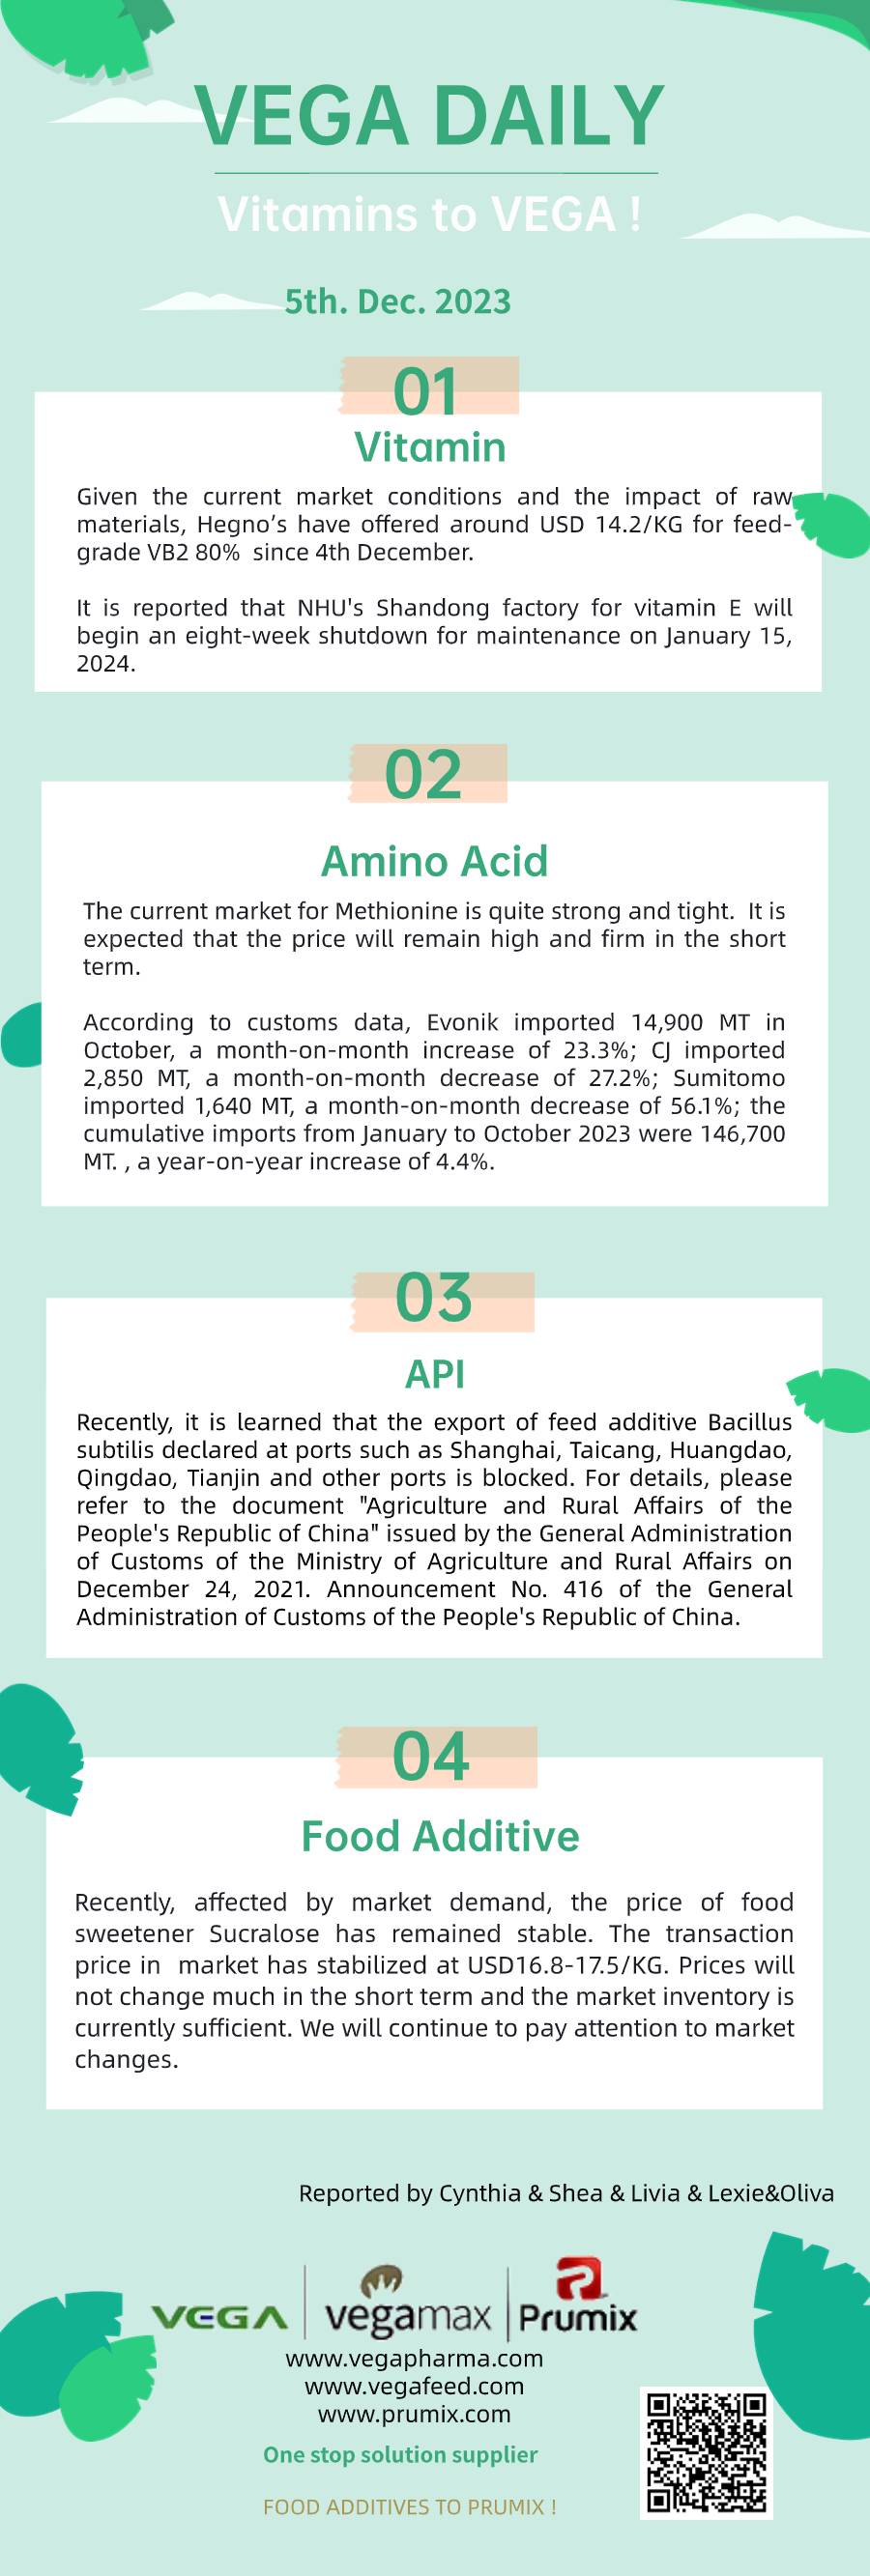 Vega Daily Dated on Dec 5th 2023 Vitamin Amino Acid APl Food Additives.jpg